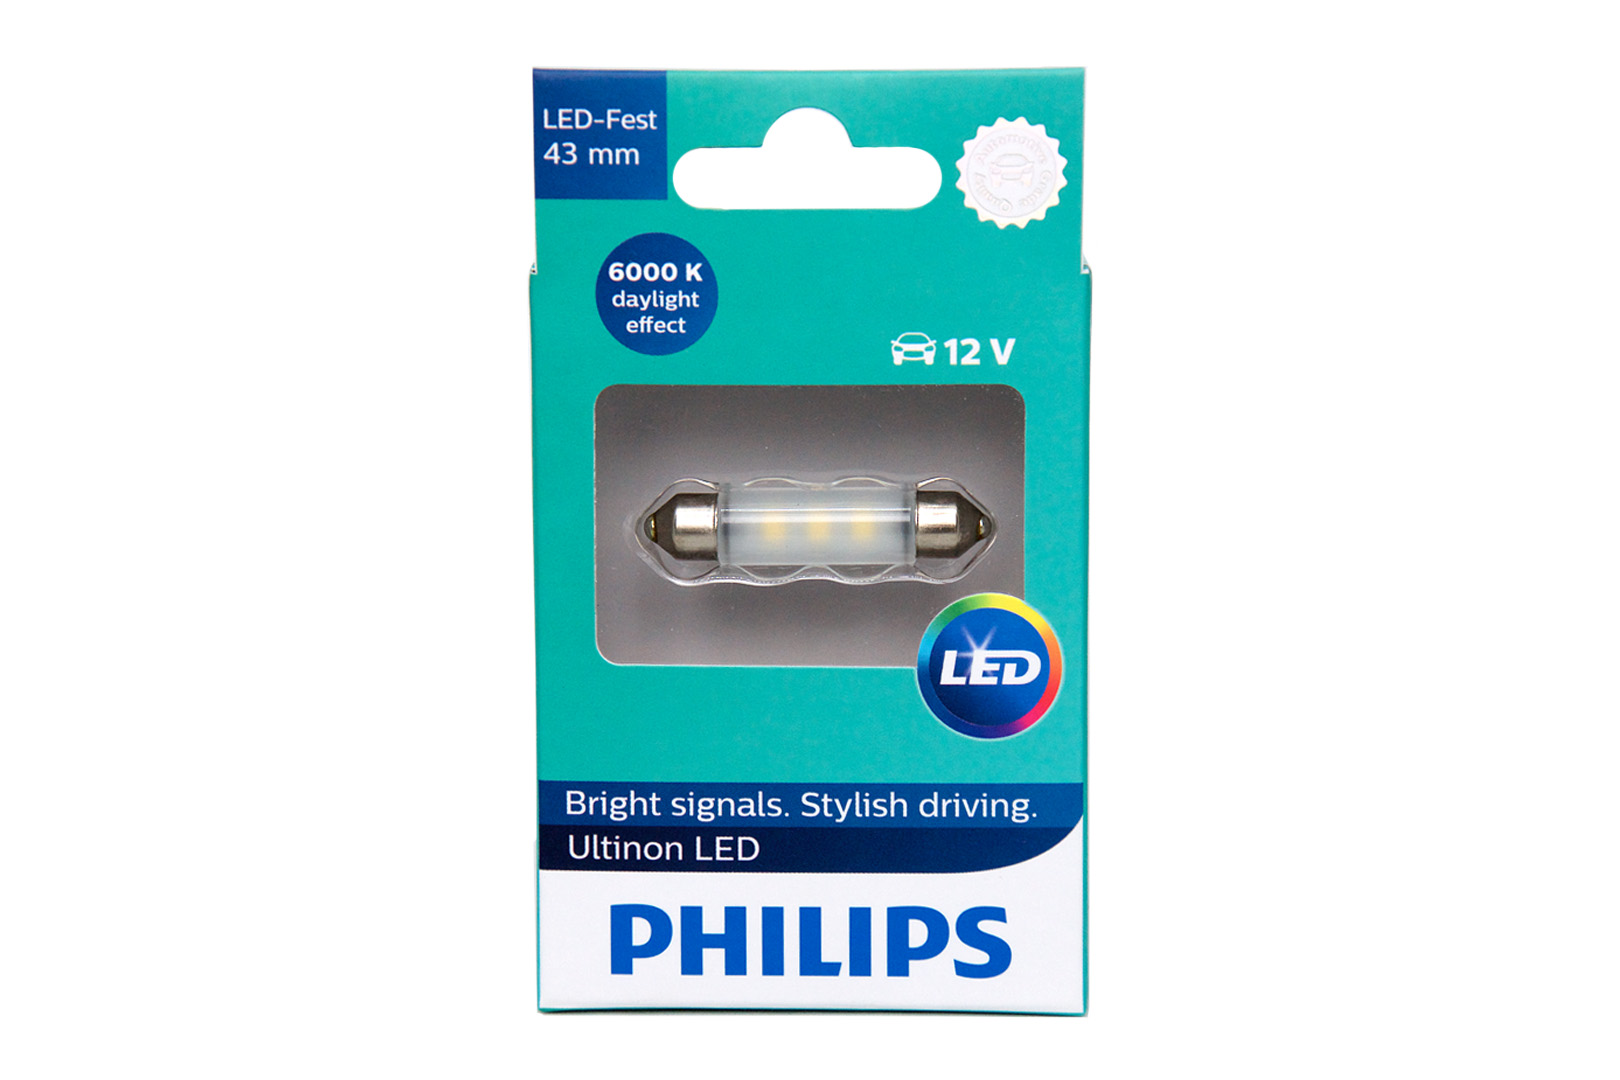 Led philips 12v. C5w Philips led. Philips led c5w 31мм. Лампа Филипс w5w светодиодная. C5w t11 Philips.